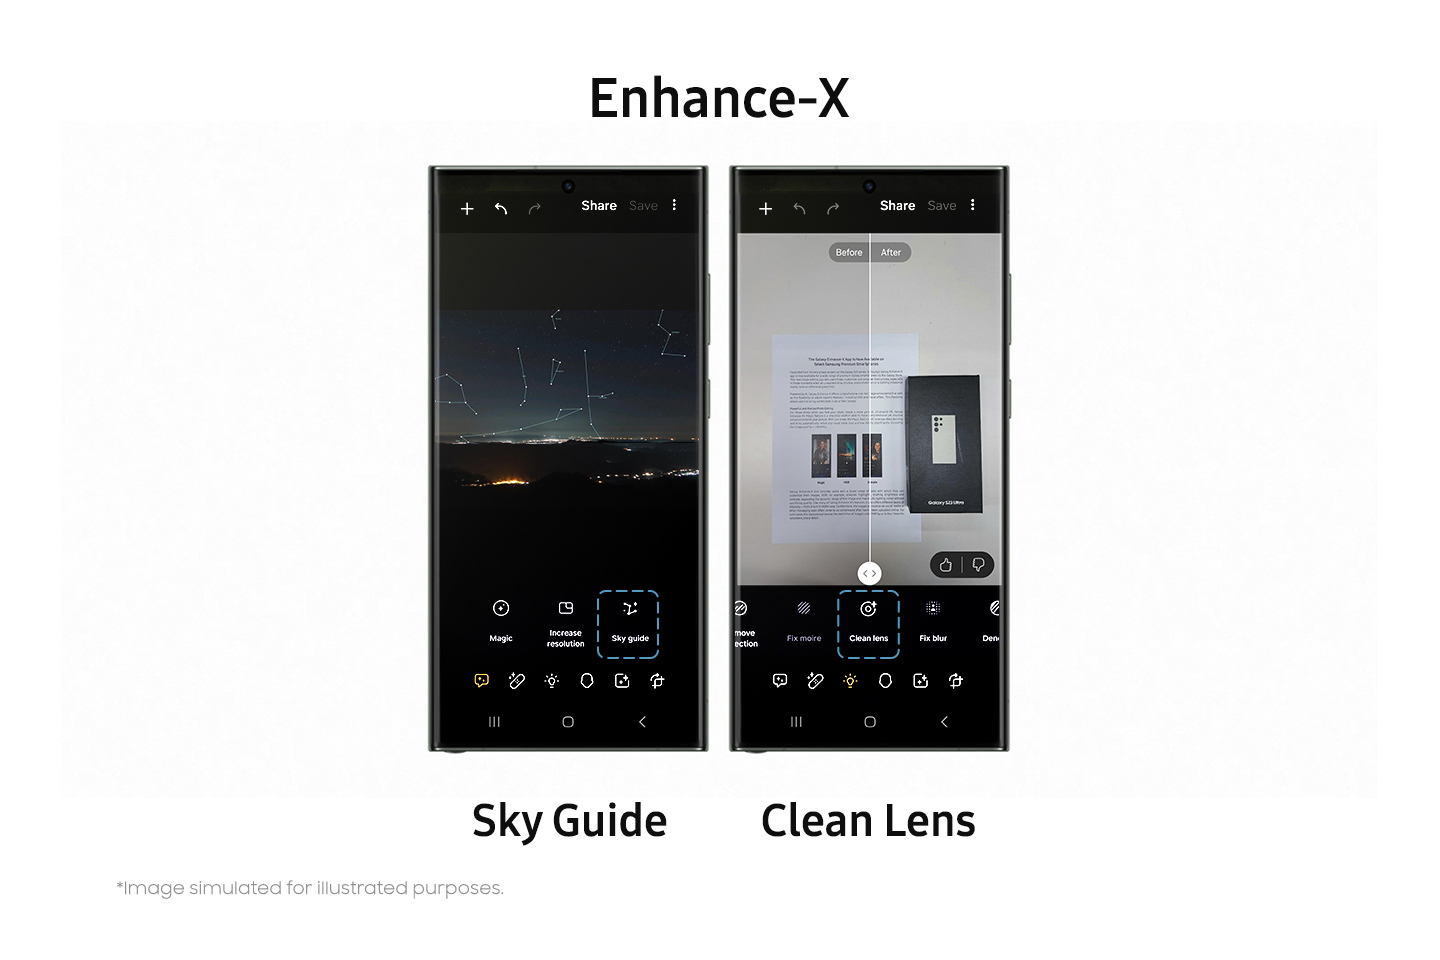 samsung-galaxy-enhance-x-app